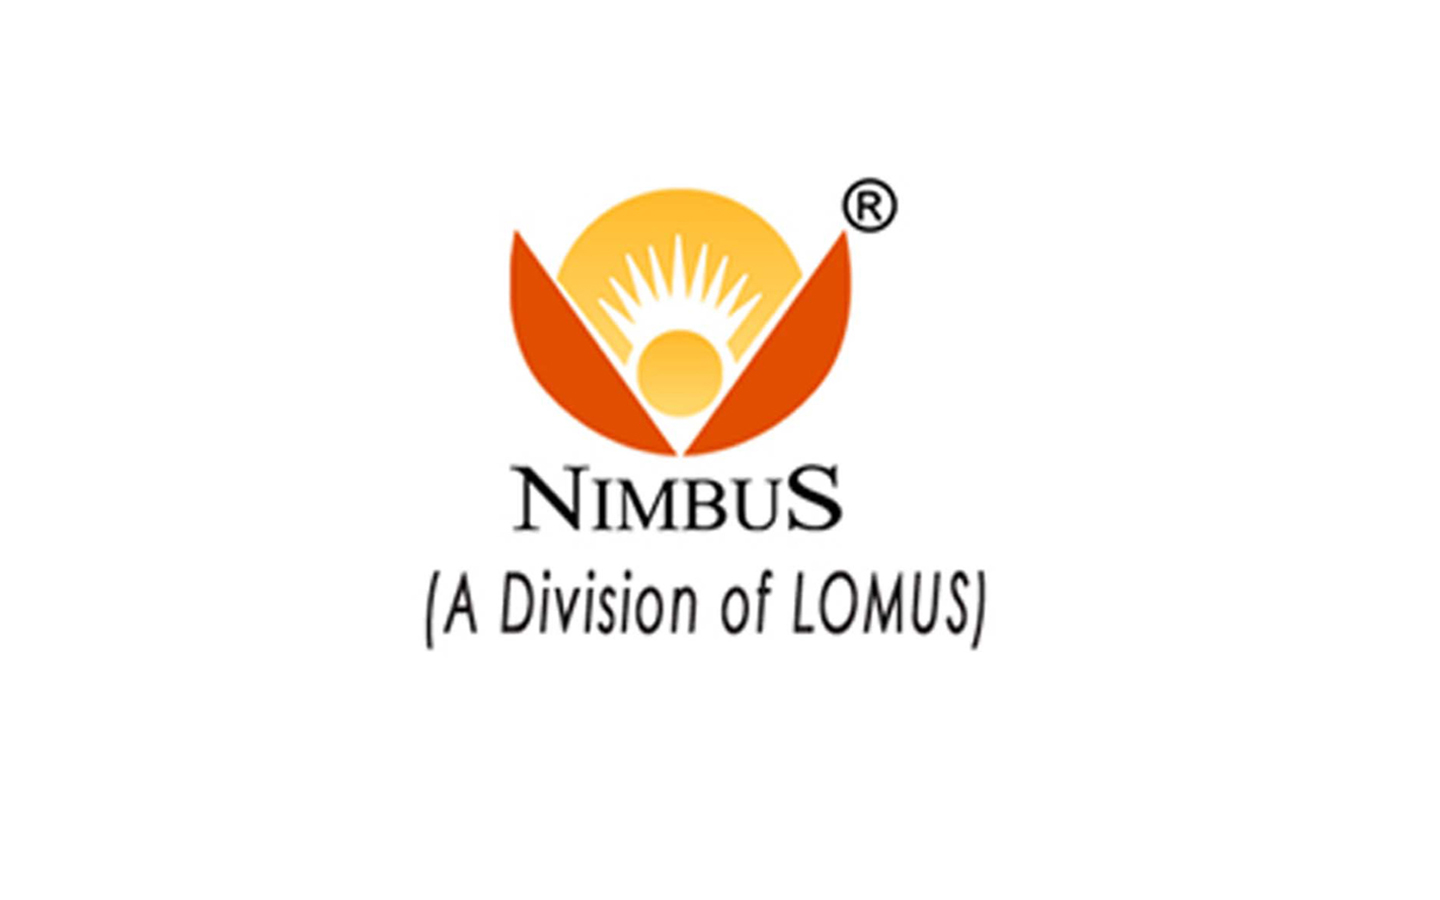 Nimbus General Division